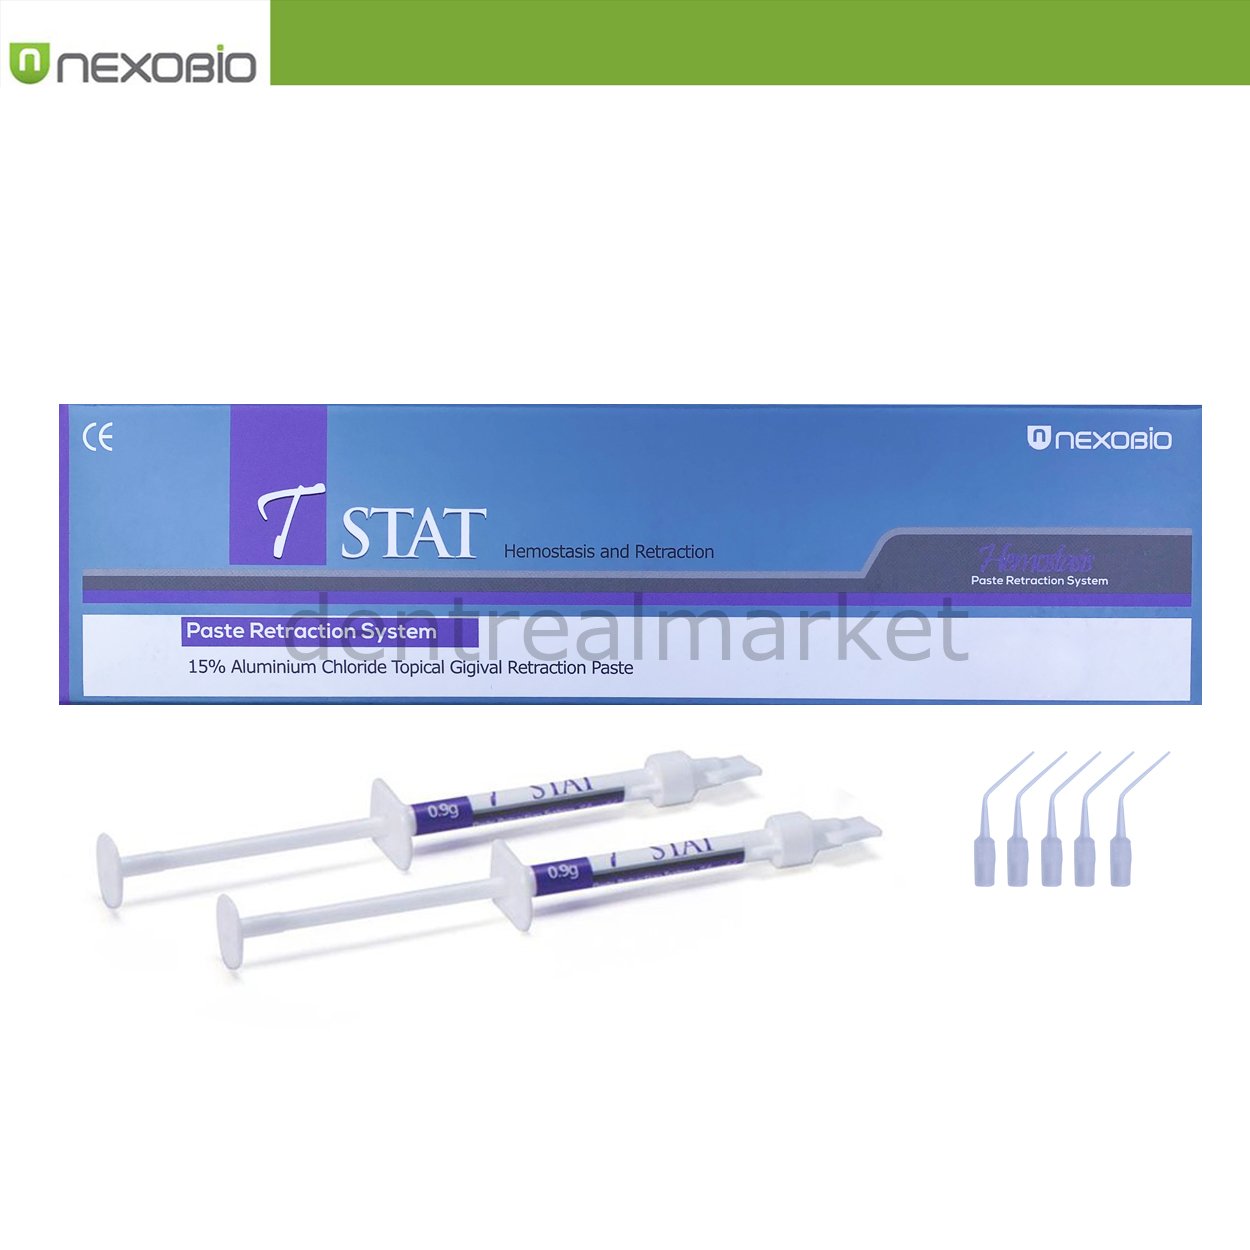 DentrealStore - Nexobio T-Stat Retraction Paste and Bleeding Stopper